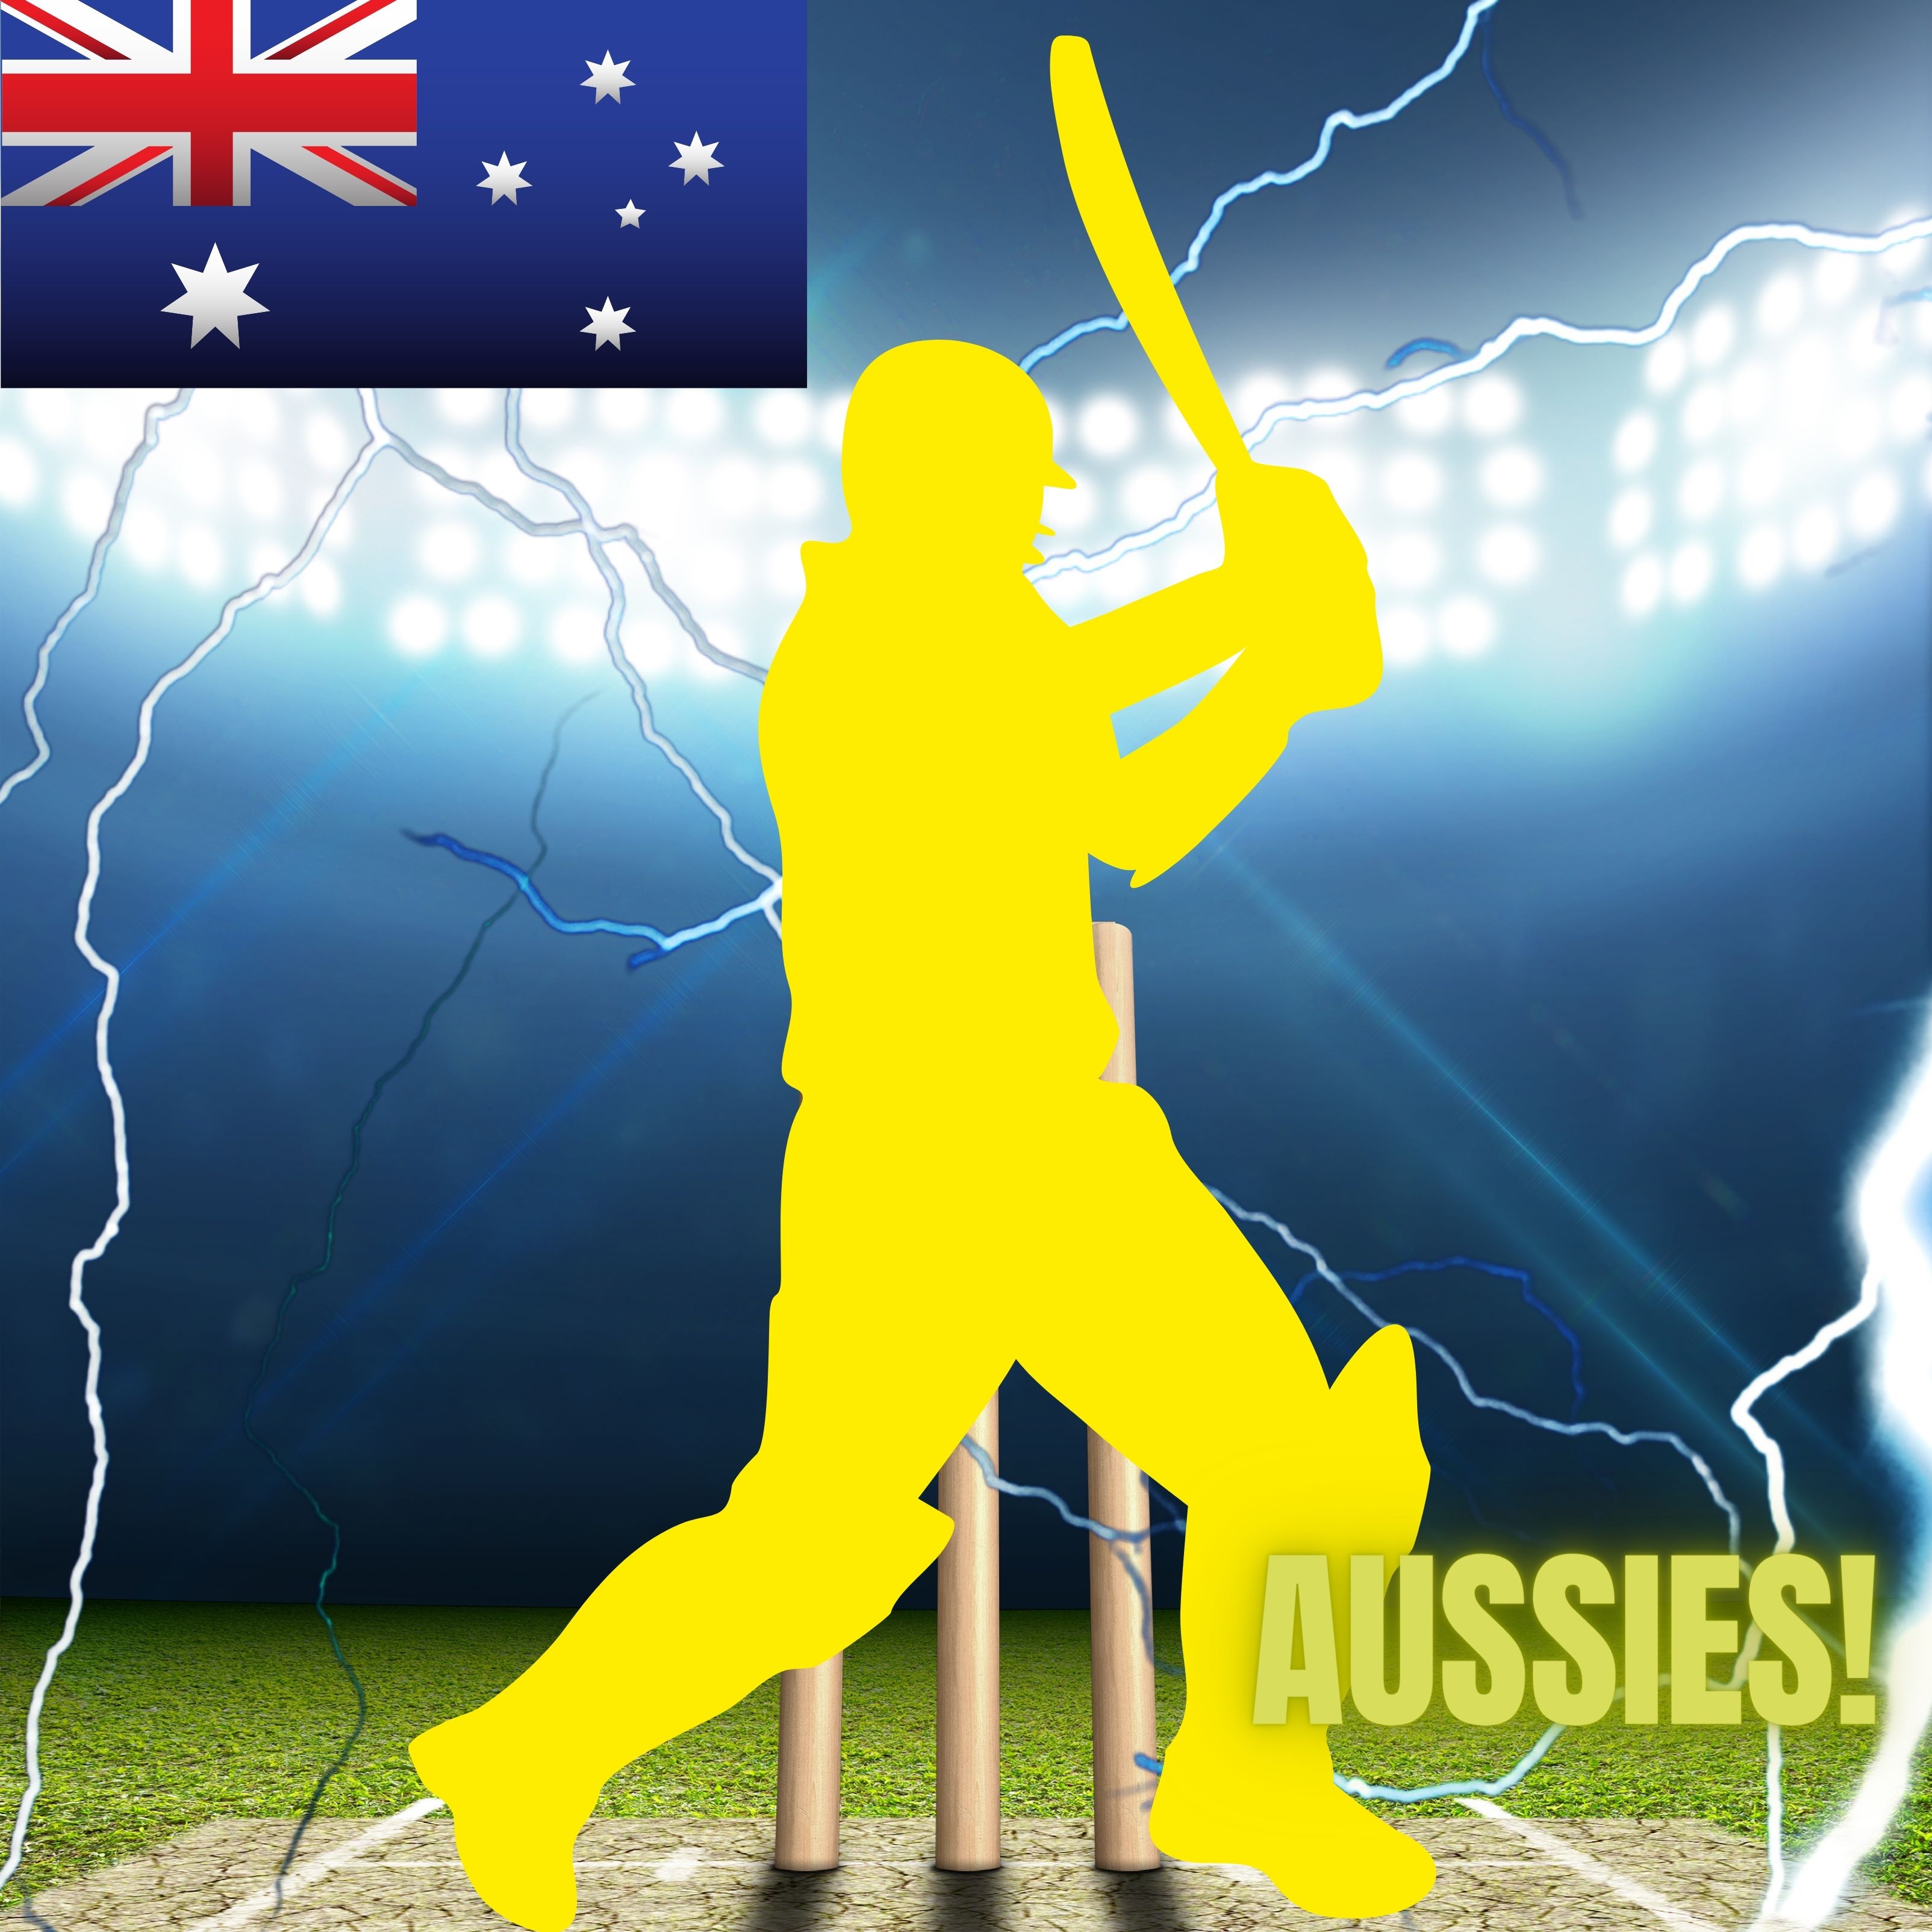 iPad Wallpapers Australia Cricket Stadium iPad Wallpaper 3208x3208 px